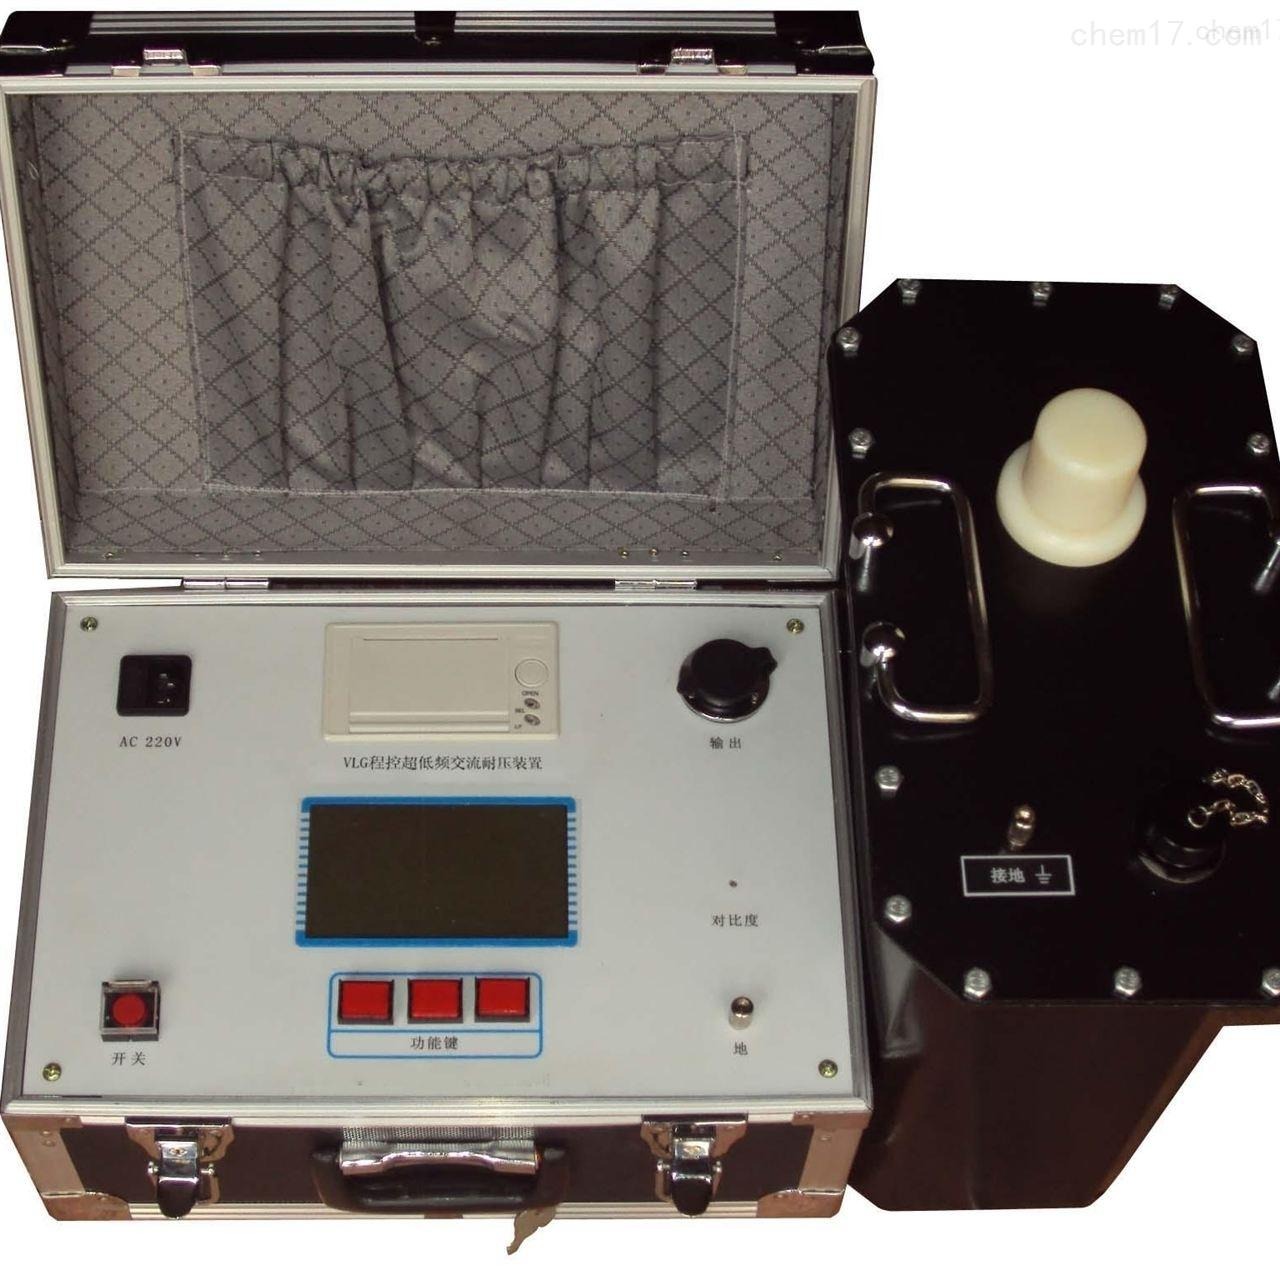 VLF-30KV0.1Hz程控超低频高压发生器